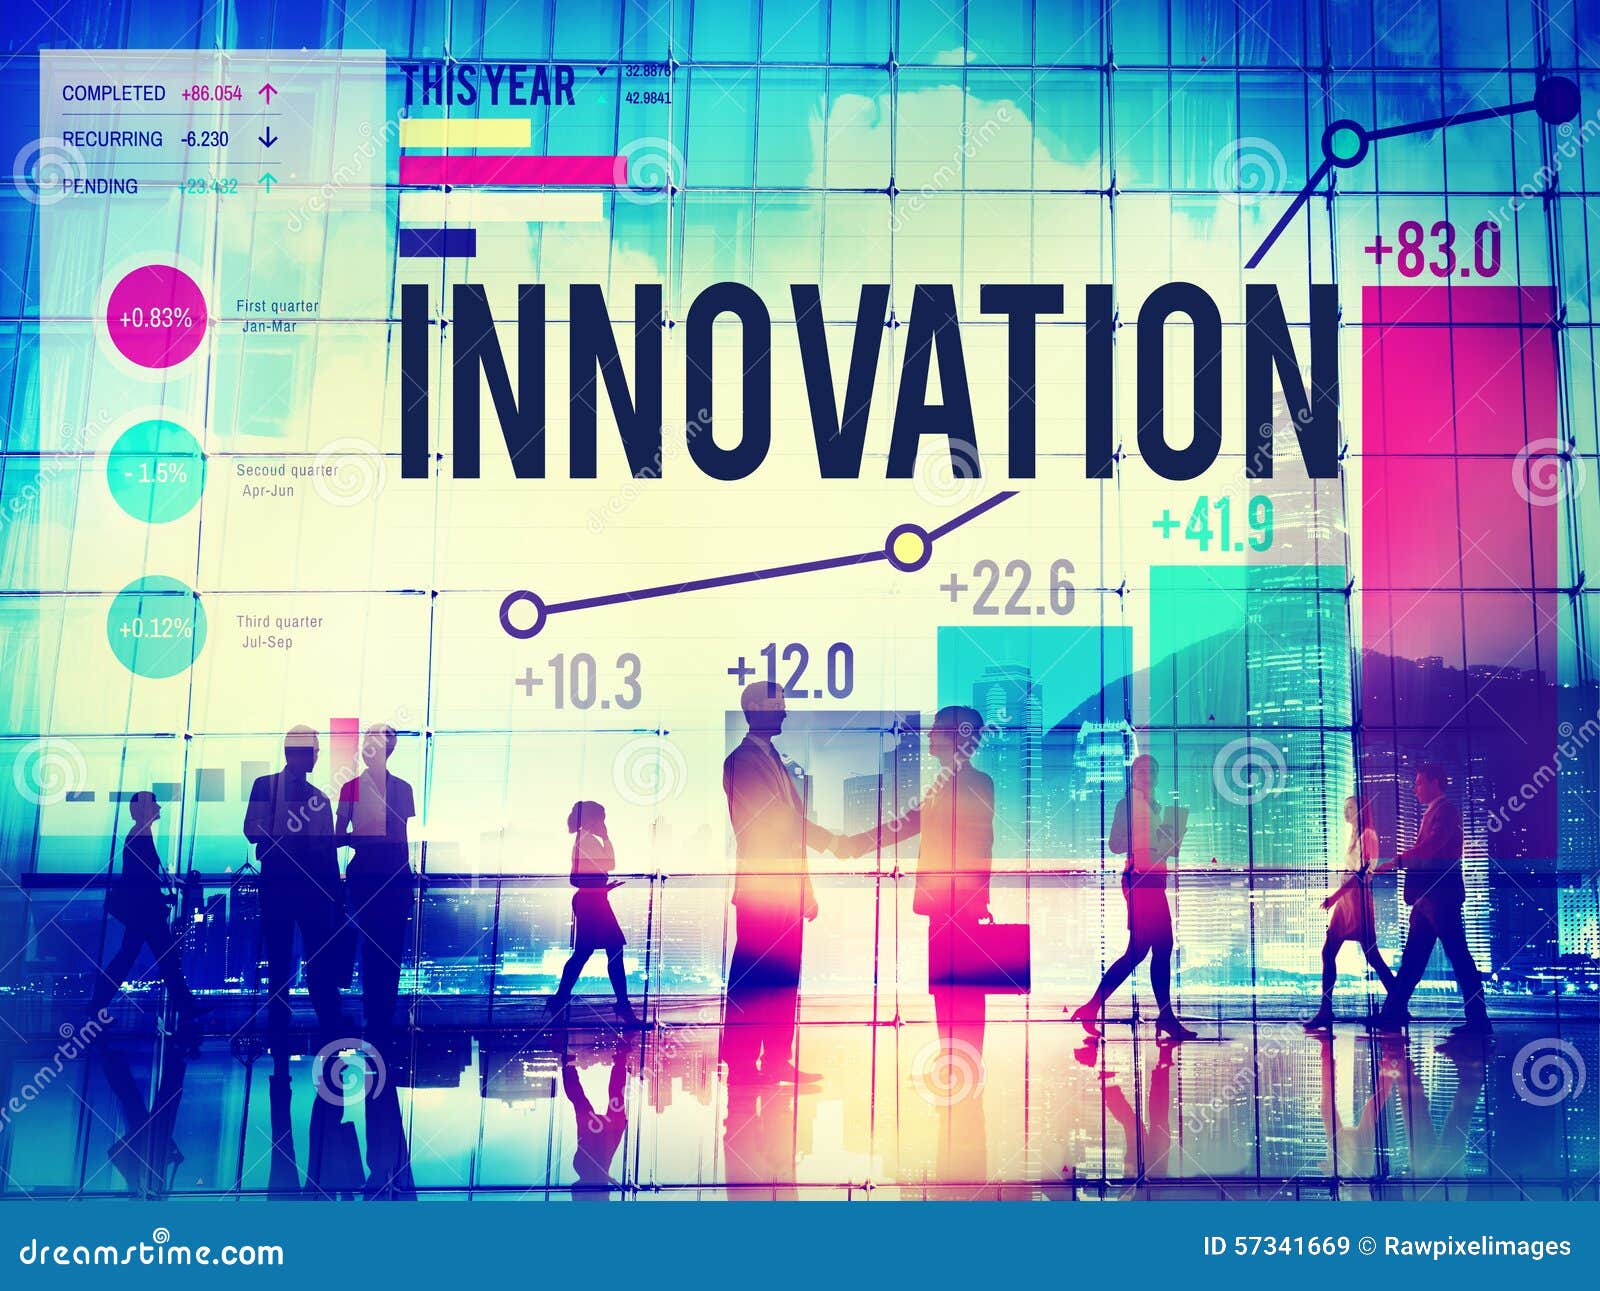 innovation innovate inspiration invention imagination concept